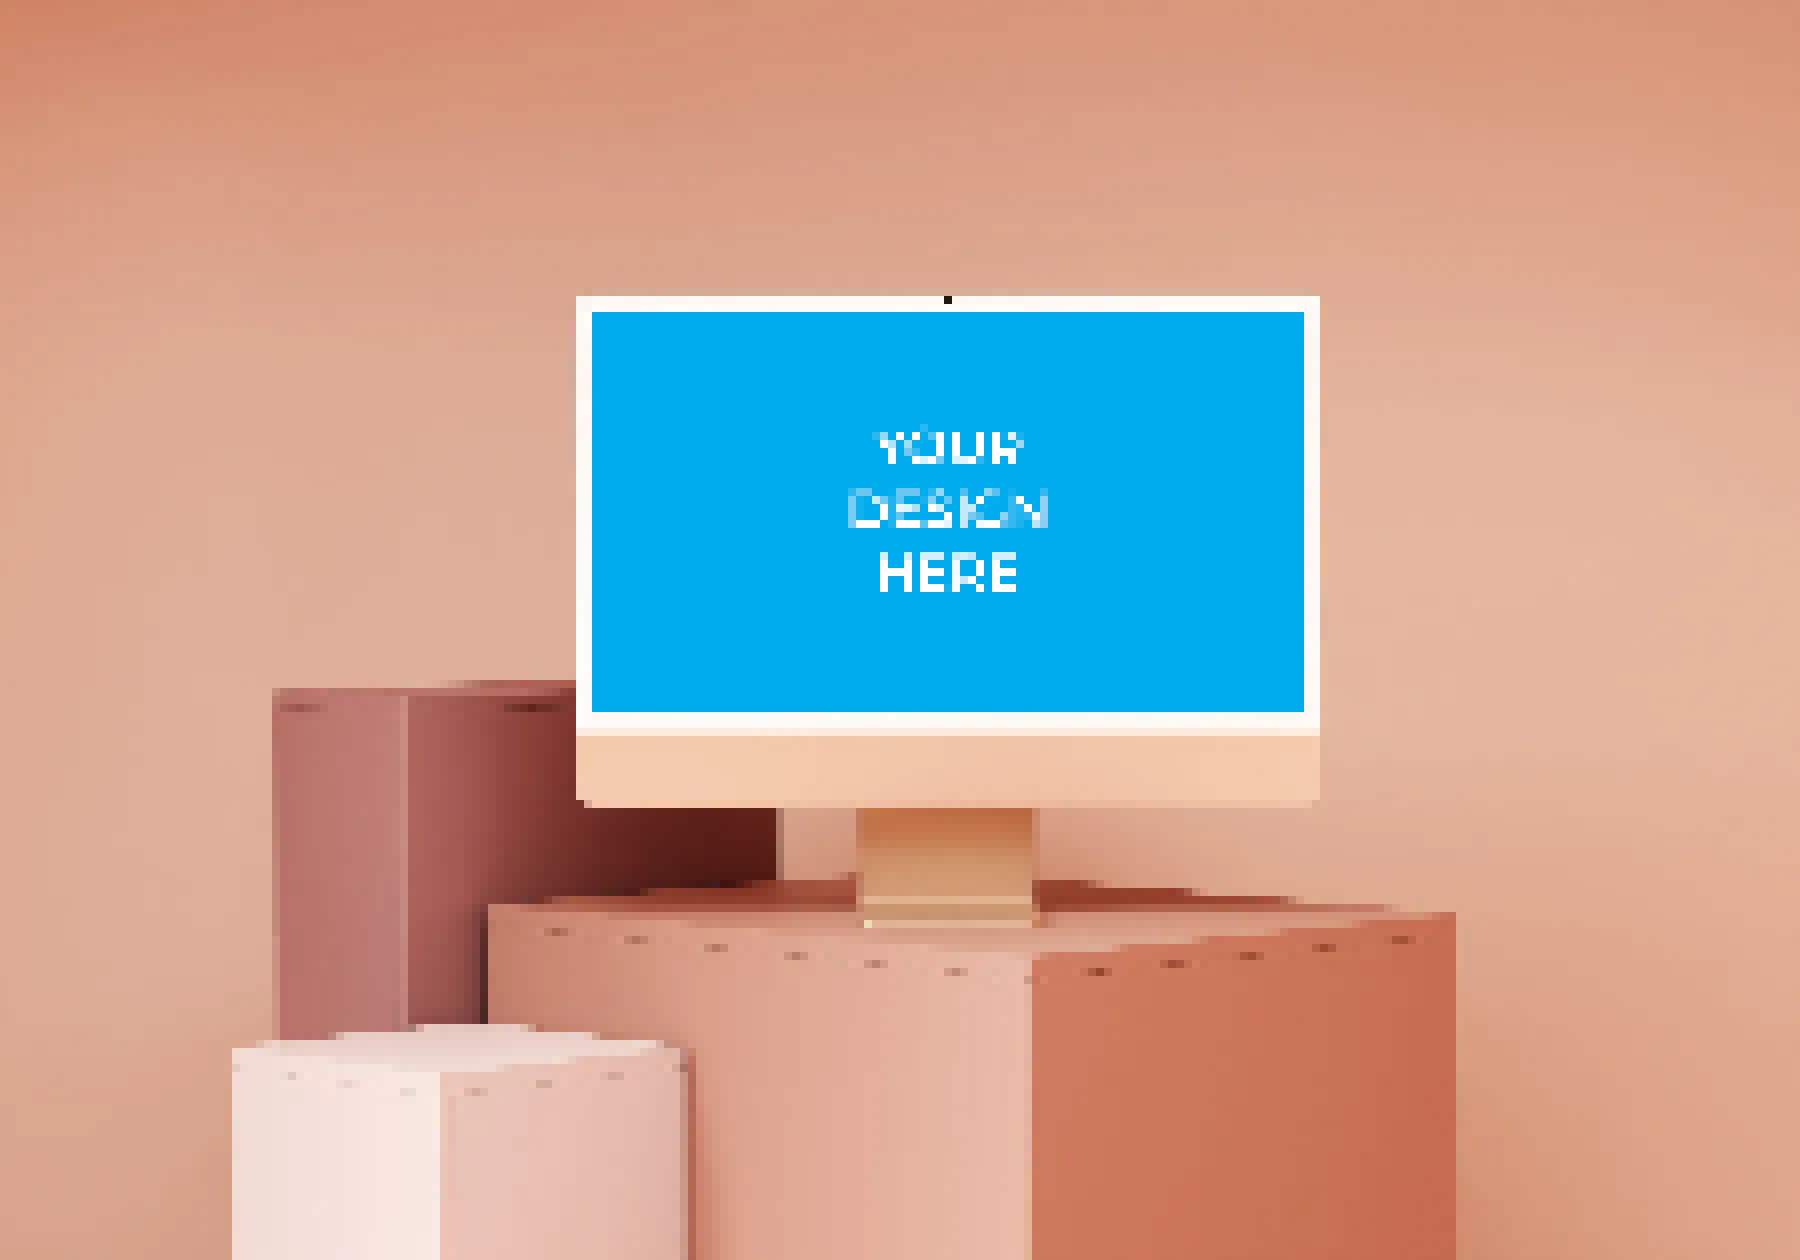 Coral iMac standing on the box in a minimalistic scene